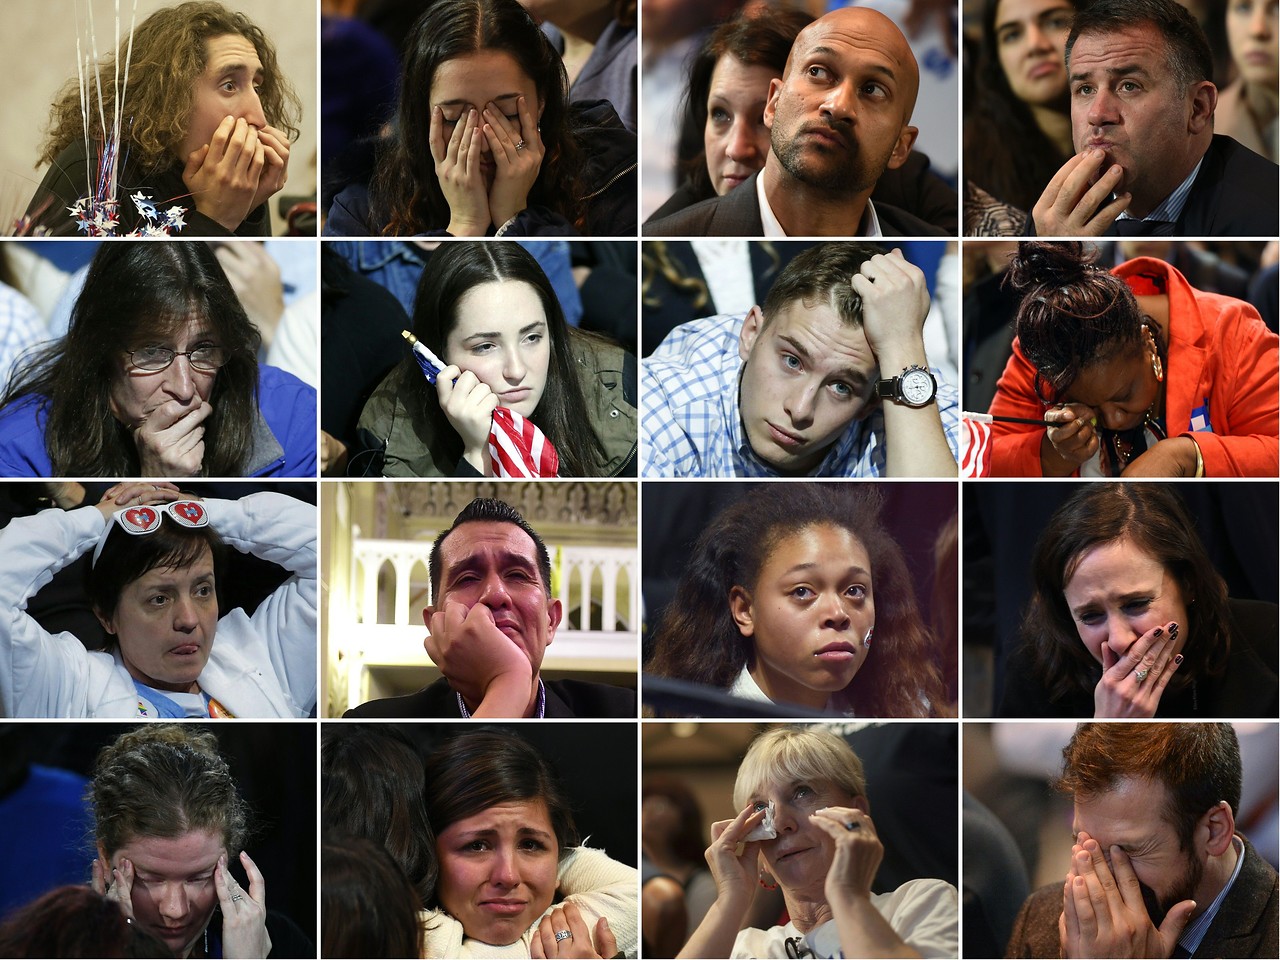 Caras de seguidores de Clinton. No hacen falta comentarios (Fotos AFP).